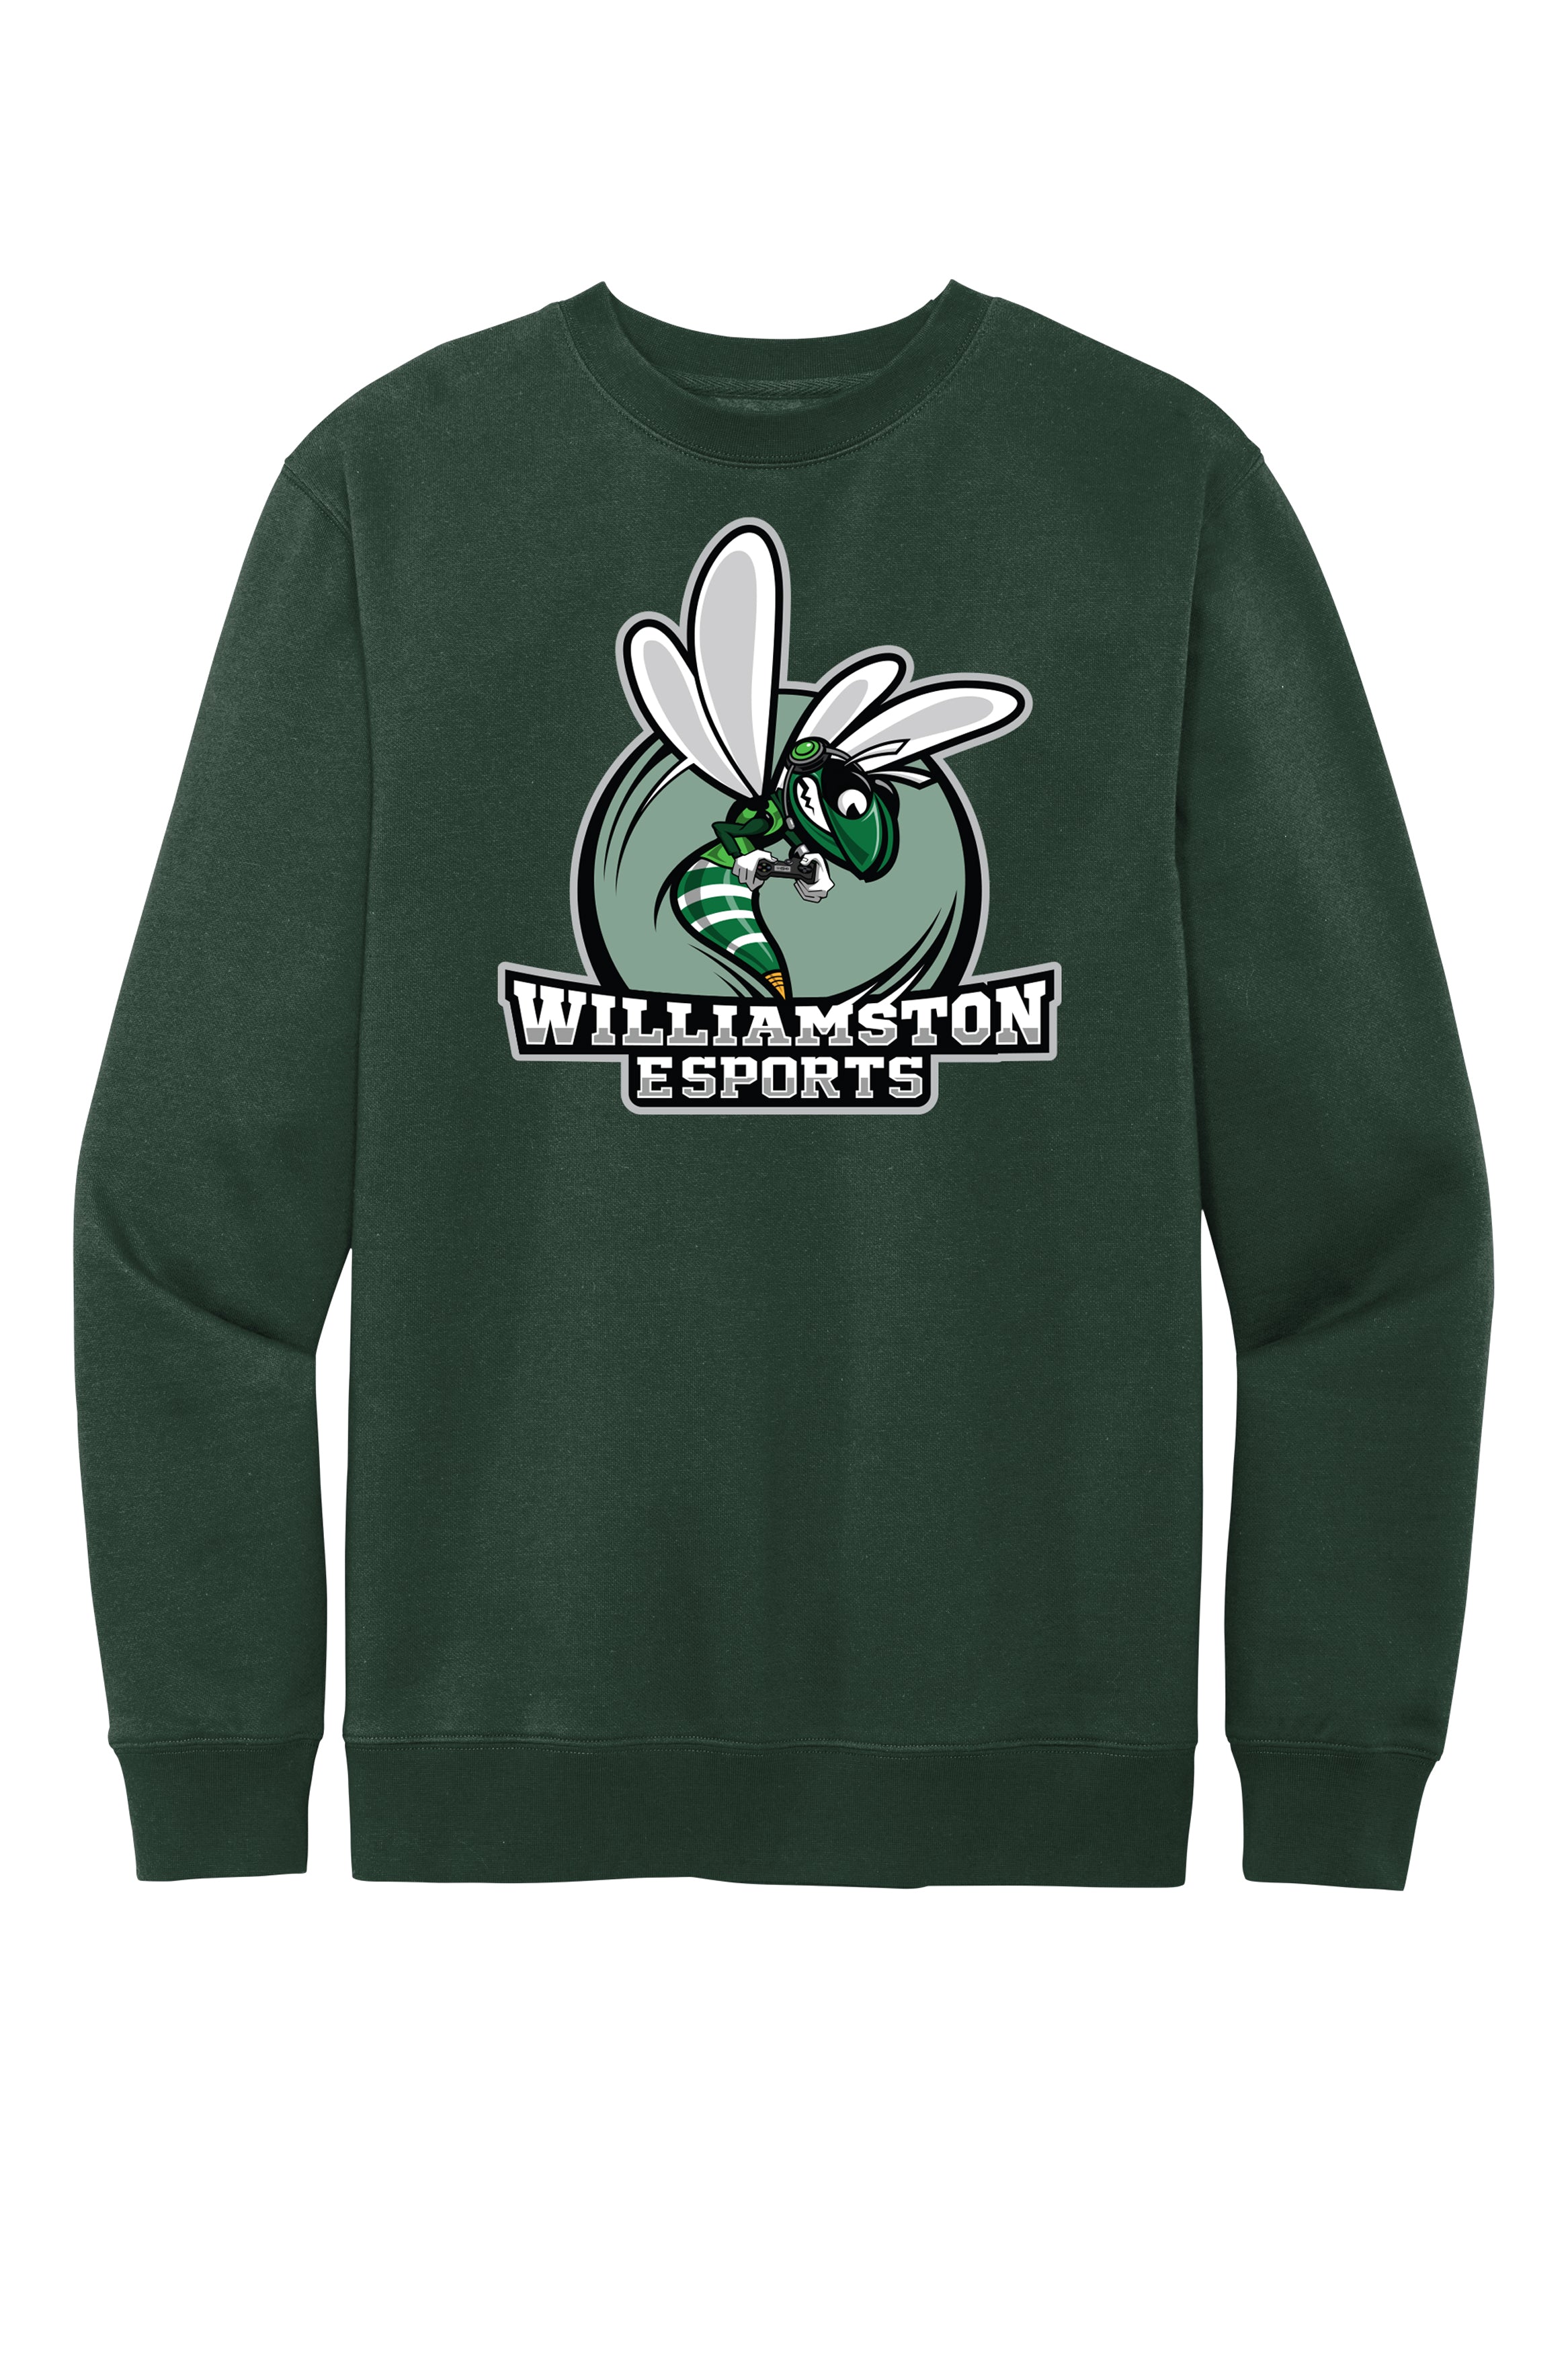 Williamston Esports - Sweatshirt